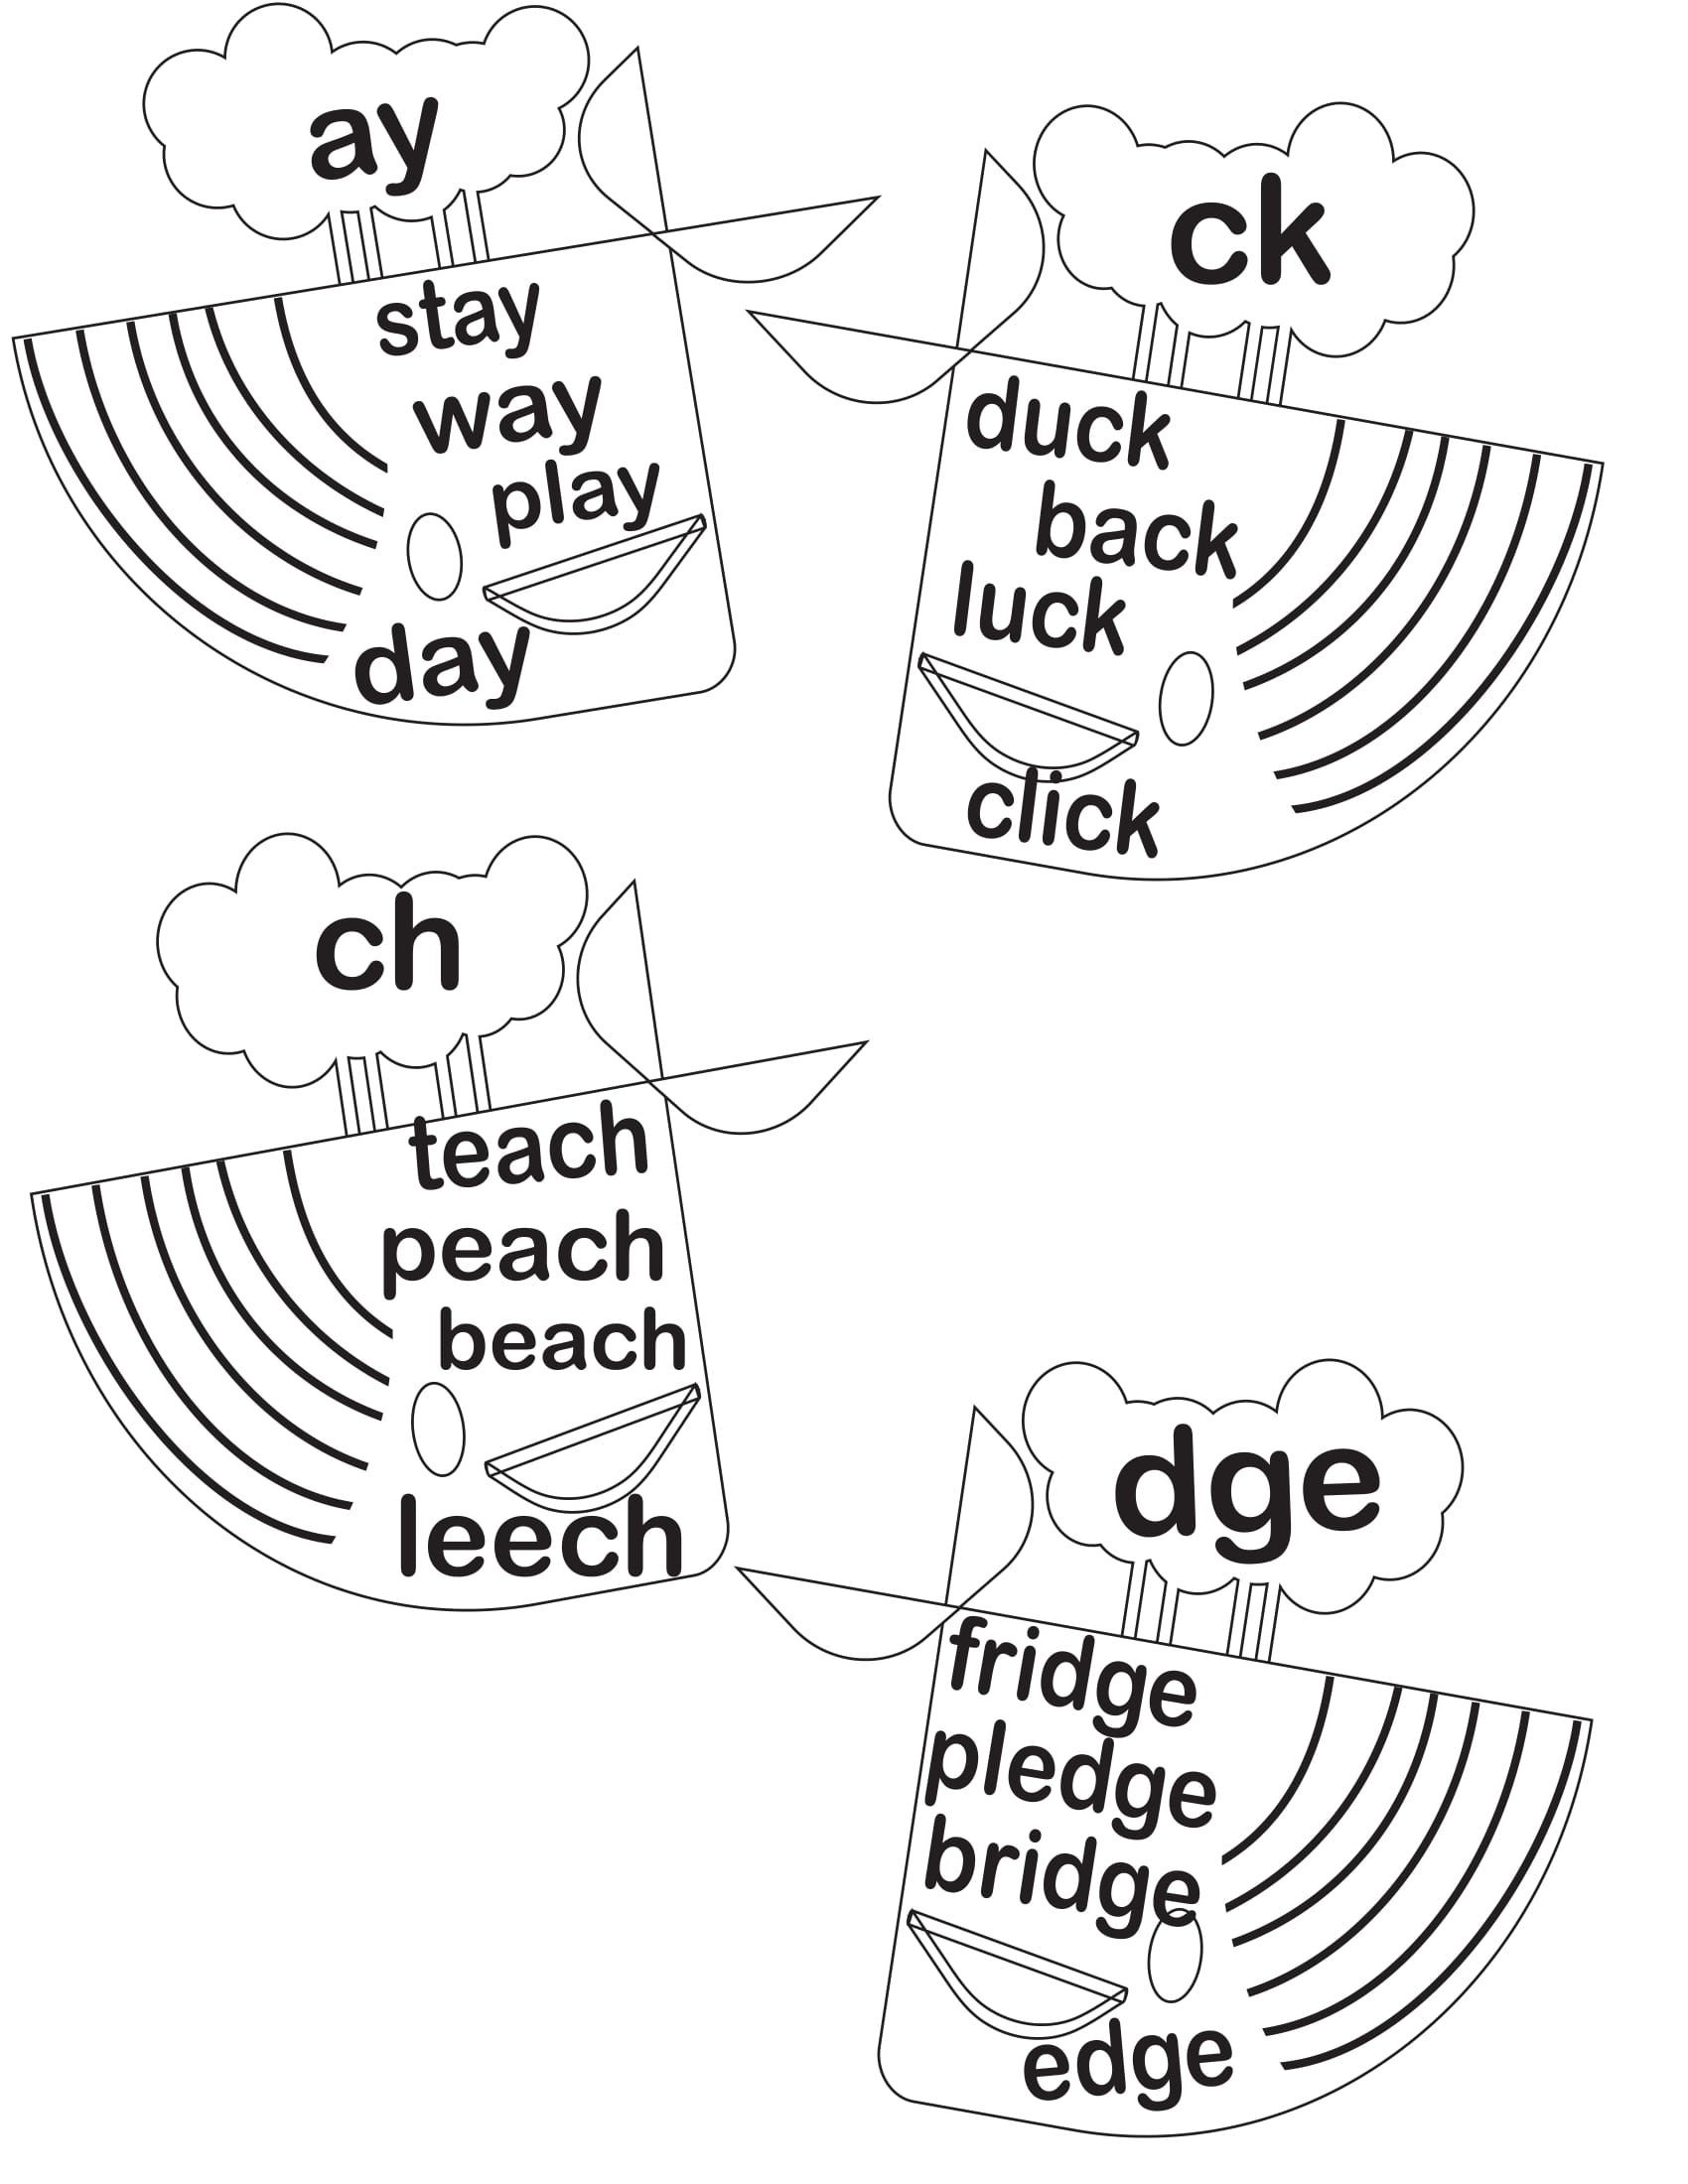 Ck Worksheets for 2nd Grade Phonograms Practice the sounds Ay Ck Dge Ch Worksheets Er Ir